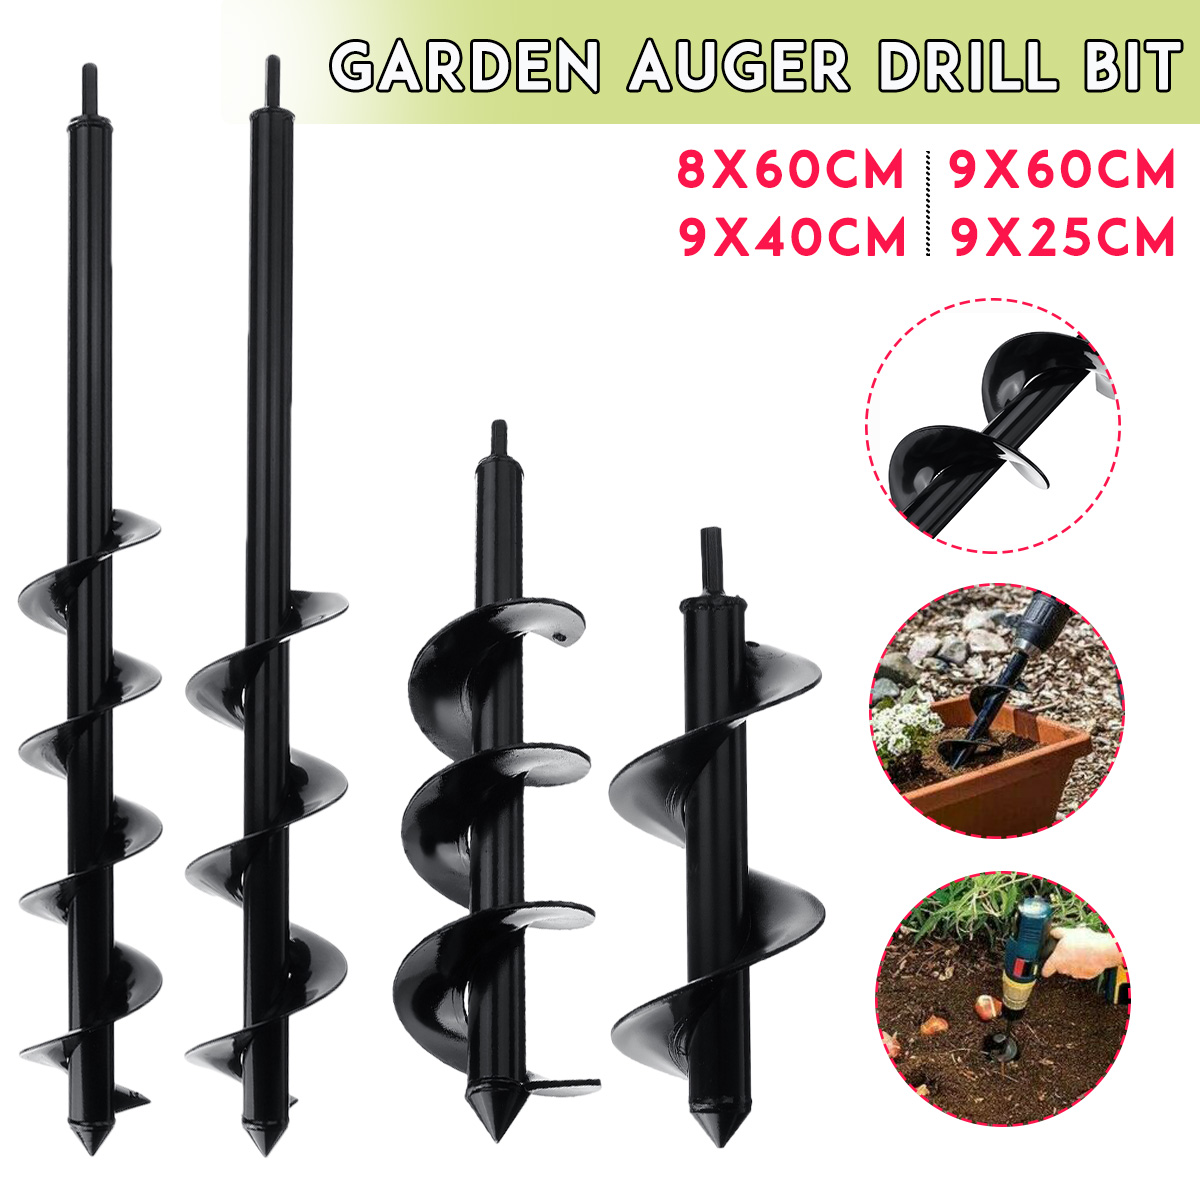 Garden-Auger-Spiral-Drill-Bit-Attachment-Bulb-Plant-Post-Bedding-Planting-Auger-Tool-1582198-1